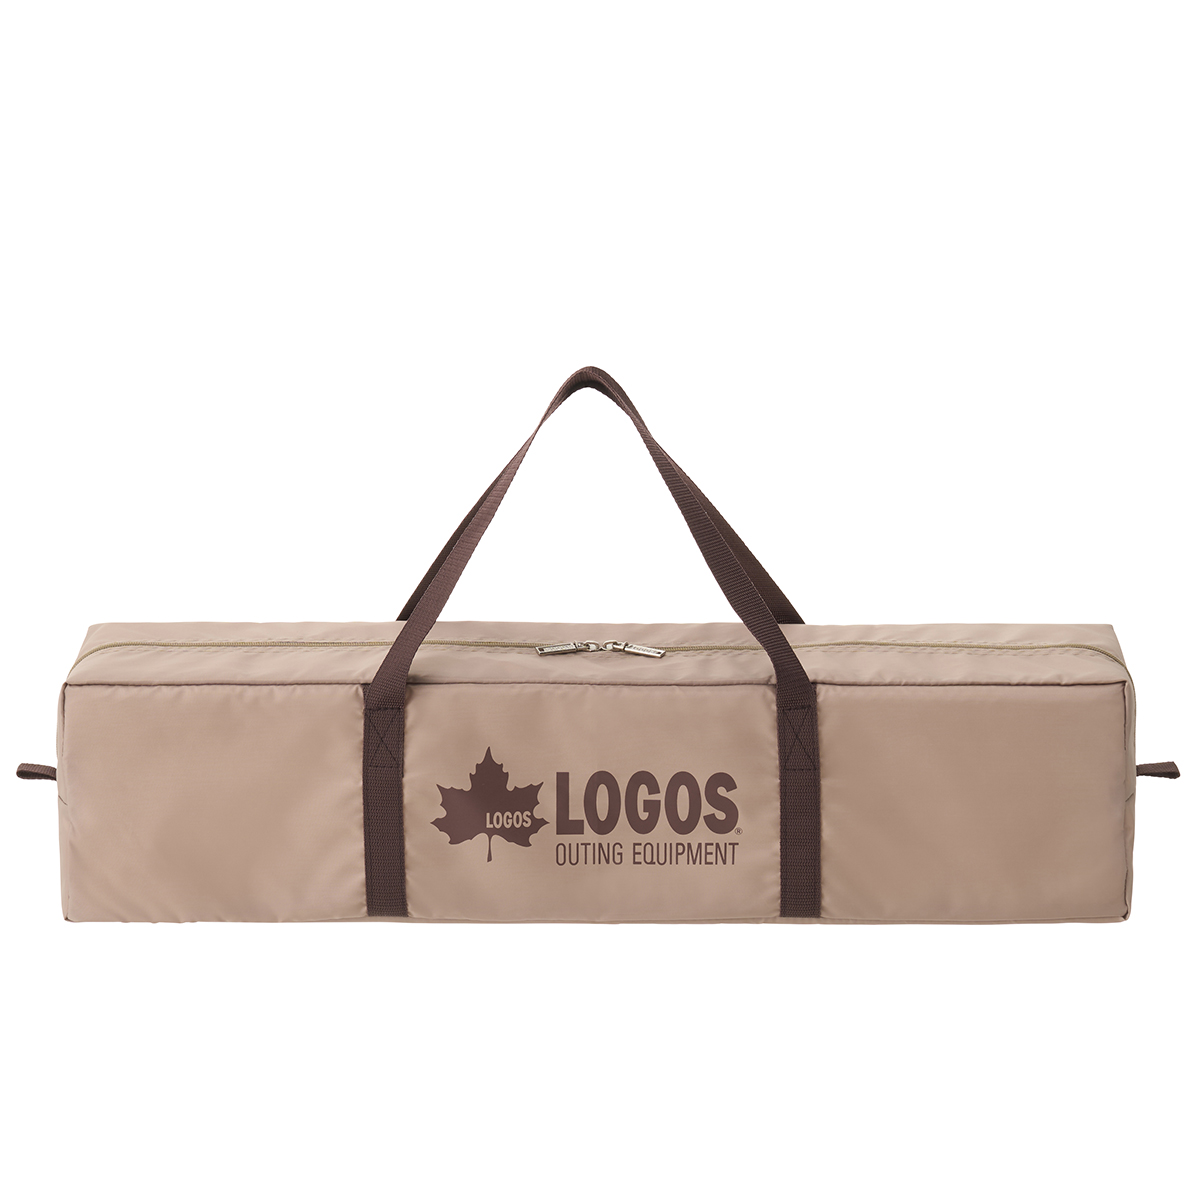 LOGOS LAND ツーリングタープ|ギア|日/火/風除け|タープ|製品情報|ロゴスショップ公式オンライン